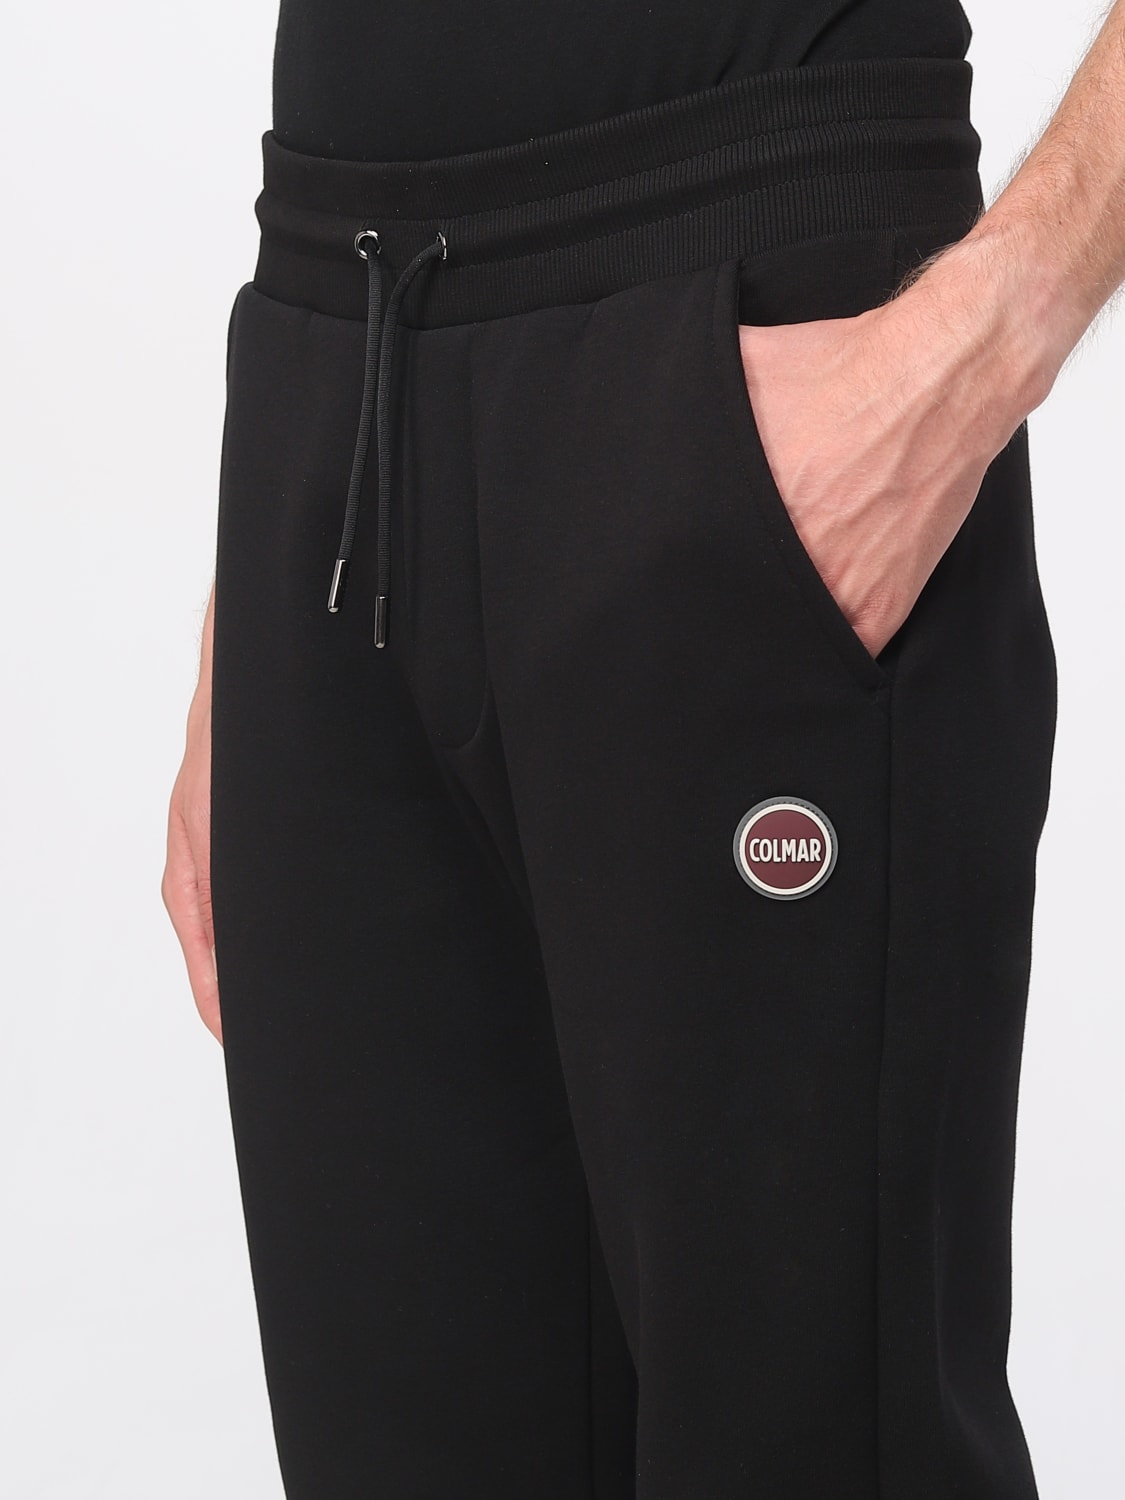 COLMAR: pants for man - Black | Colmar pants 82541WX online on GIGLIO.COM